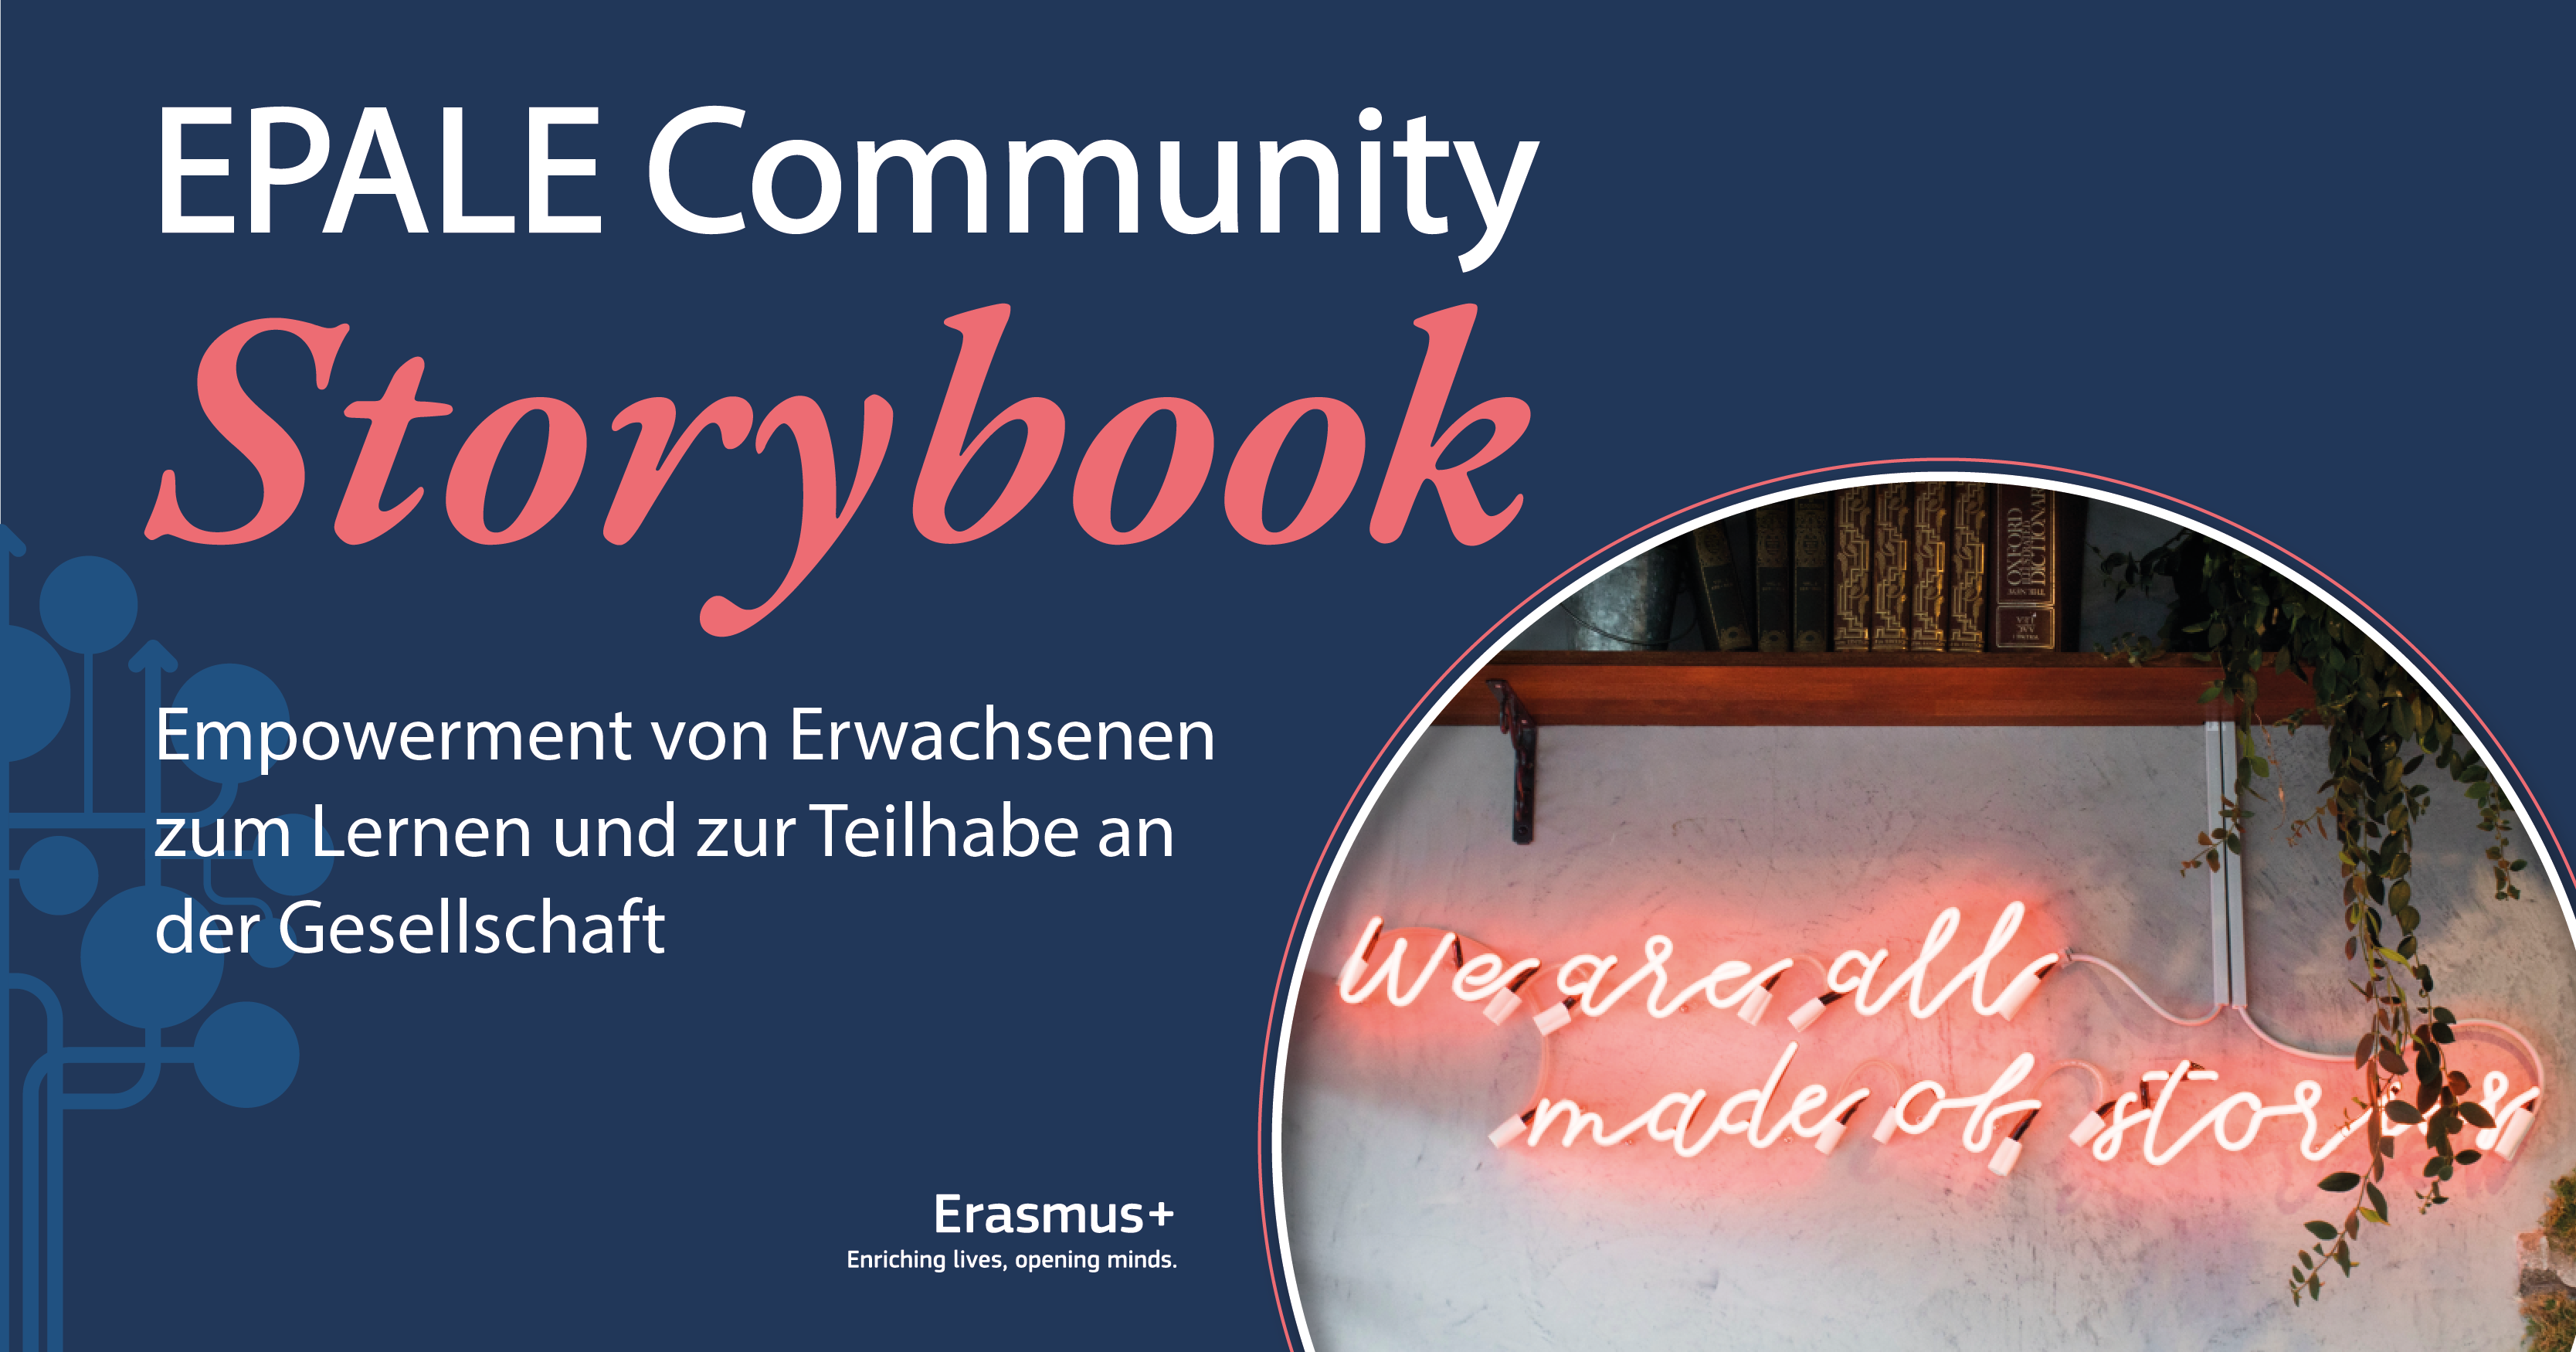 EPALE Community Storybook